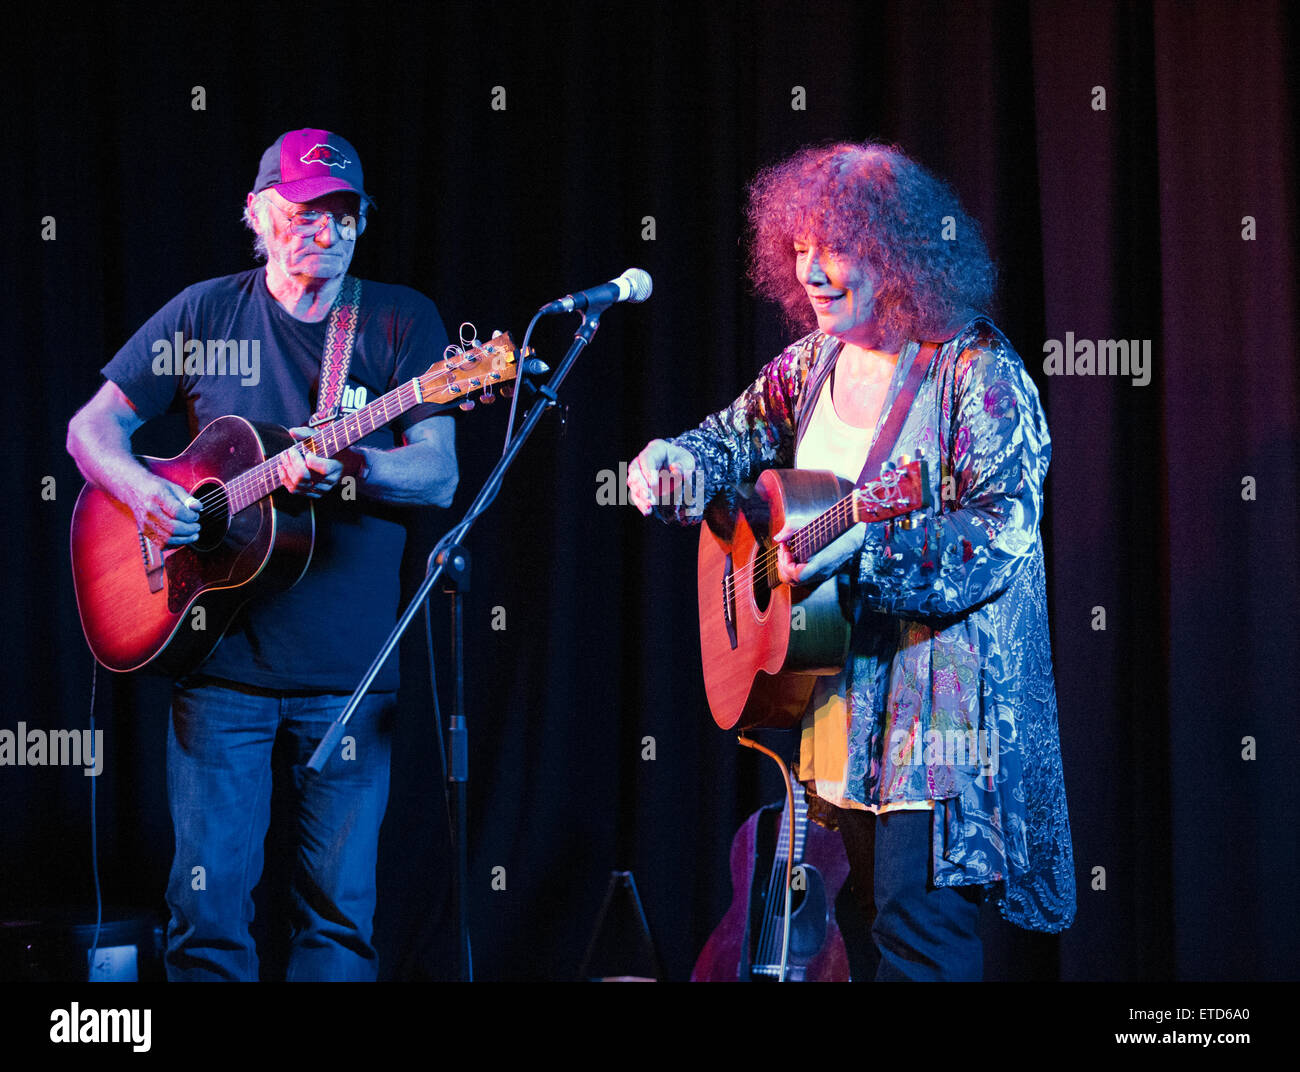 Singer songwriters Bridget St John and Michael Chapman in concert at The Continental, Preston, Lancashire, UK. Stock Photo